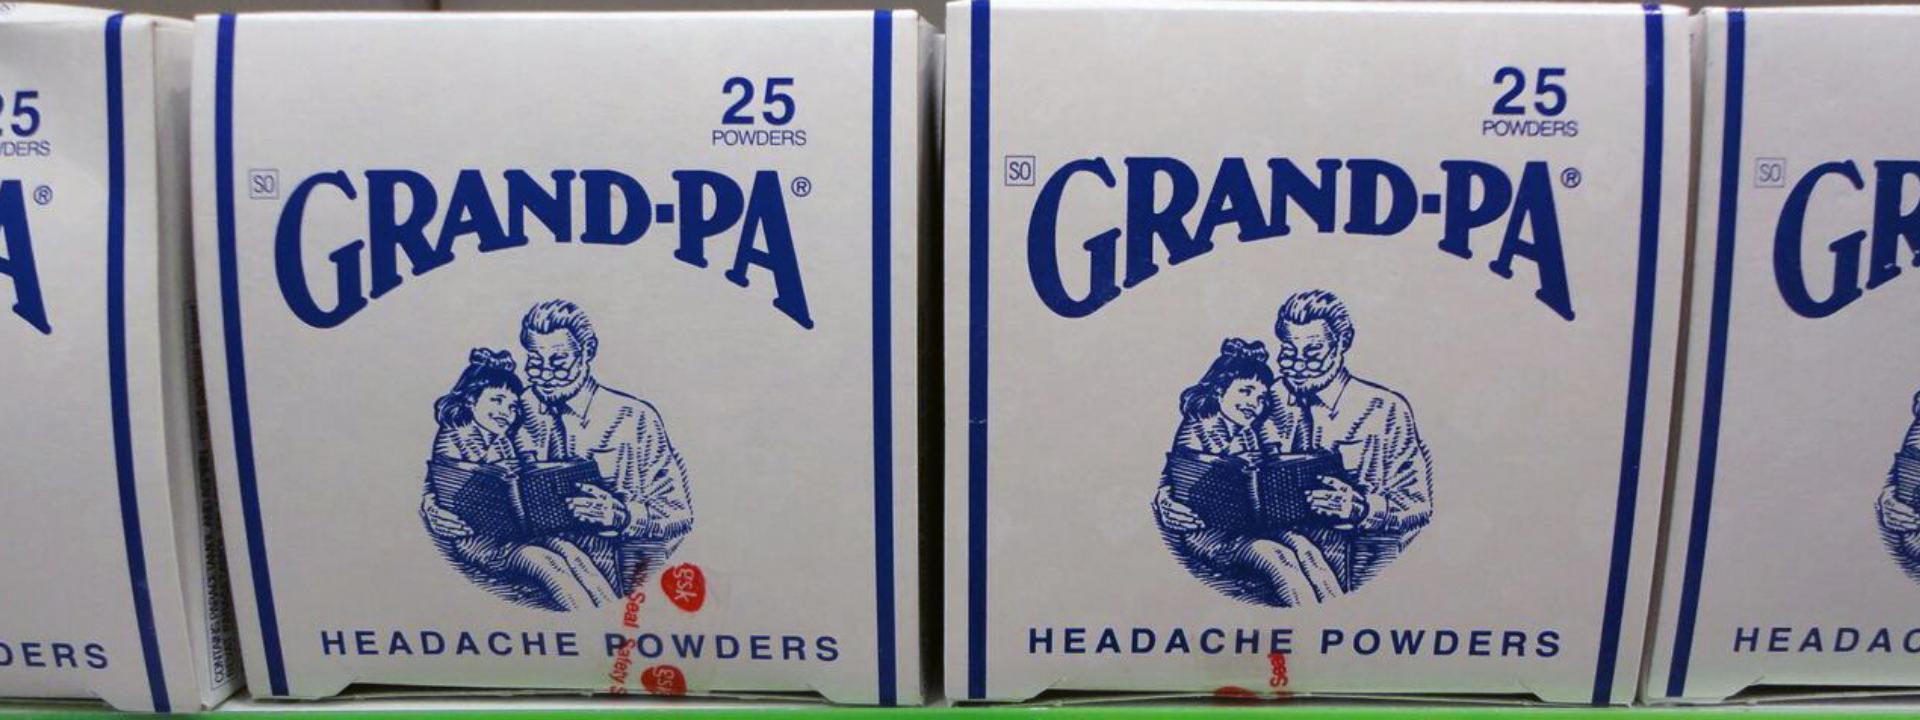 Grandpa powder box